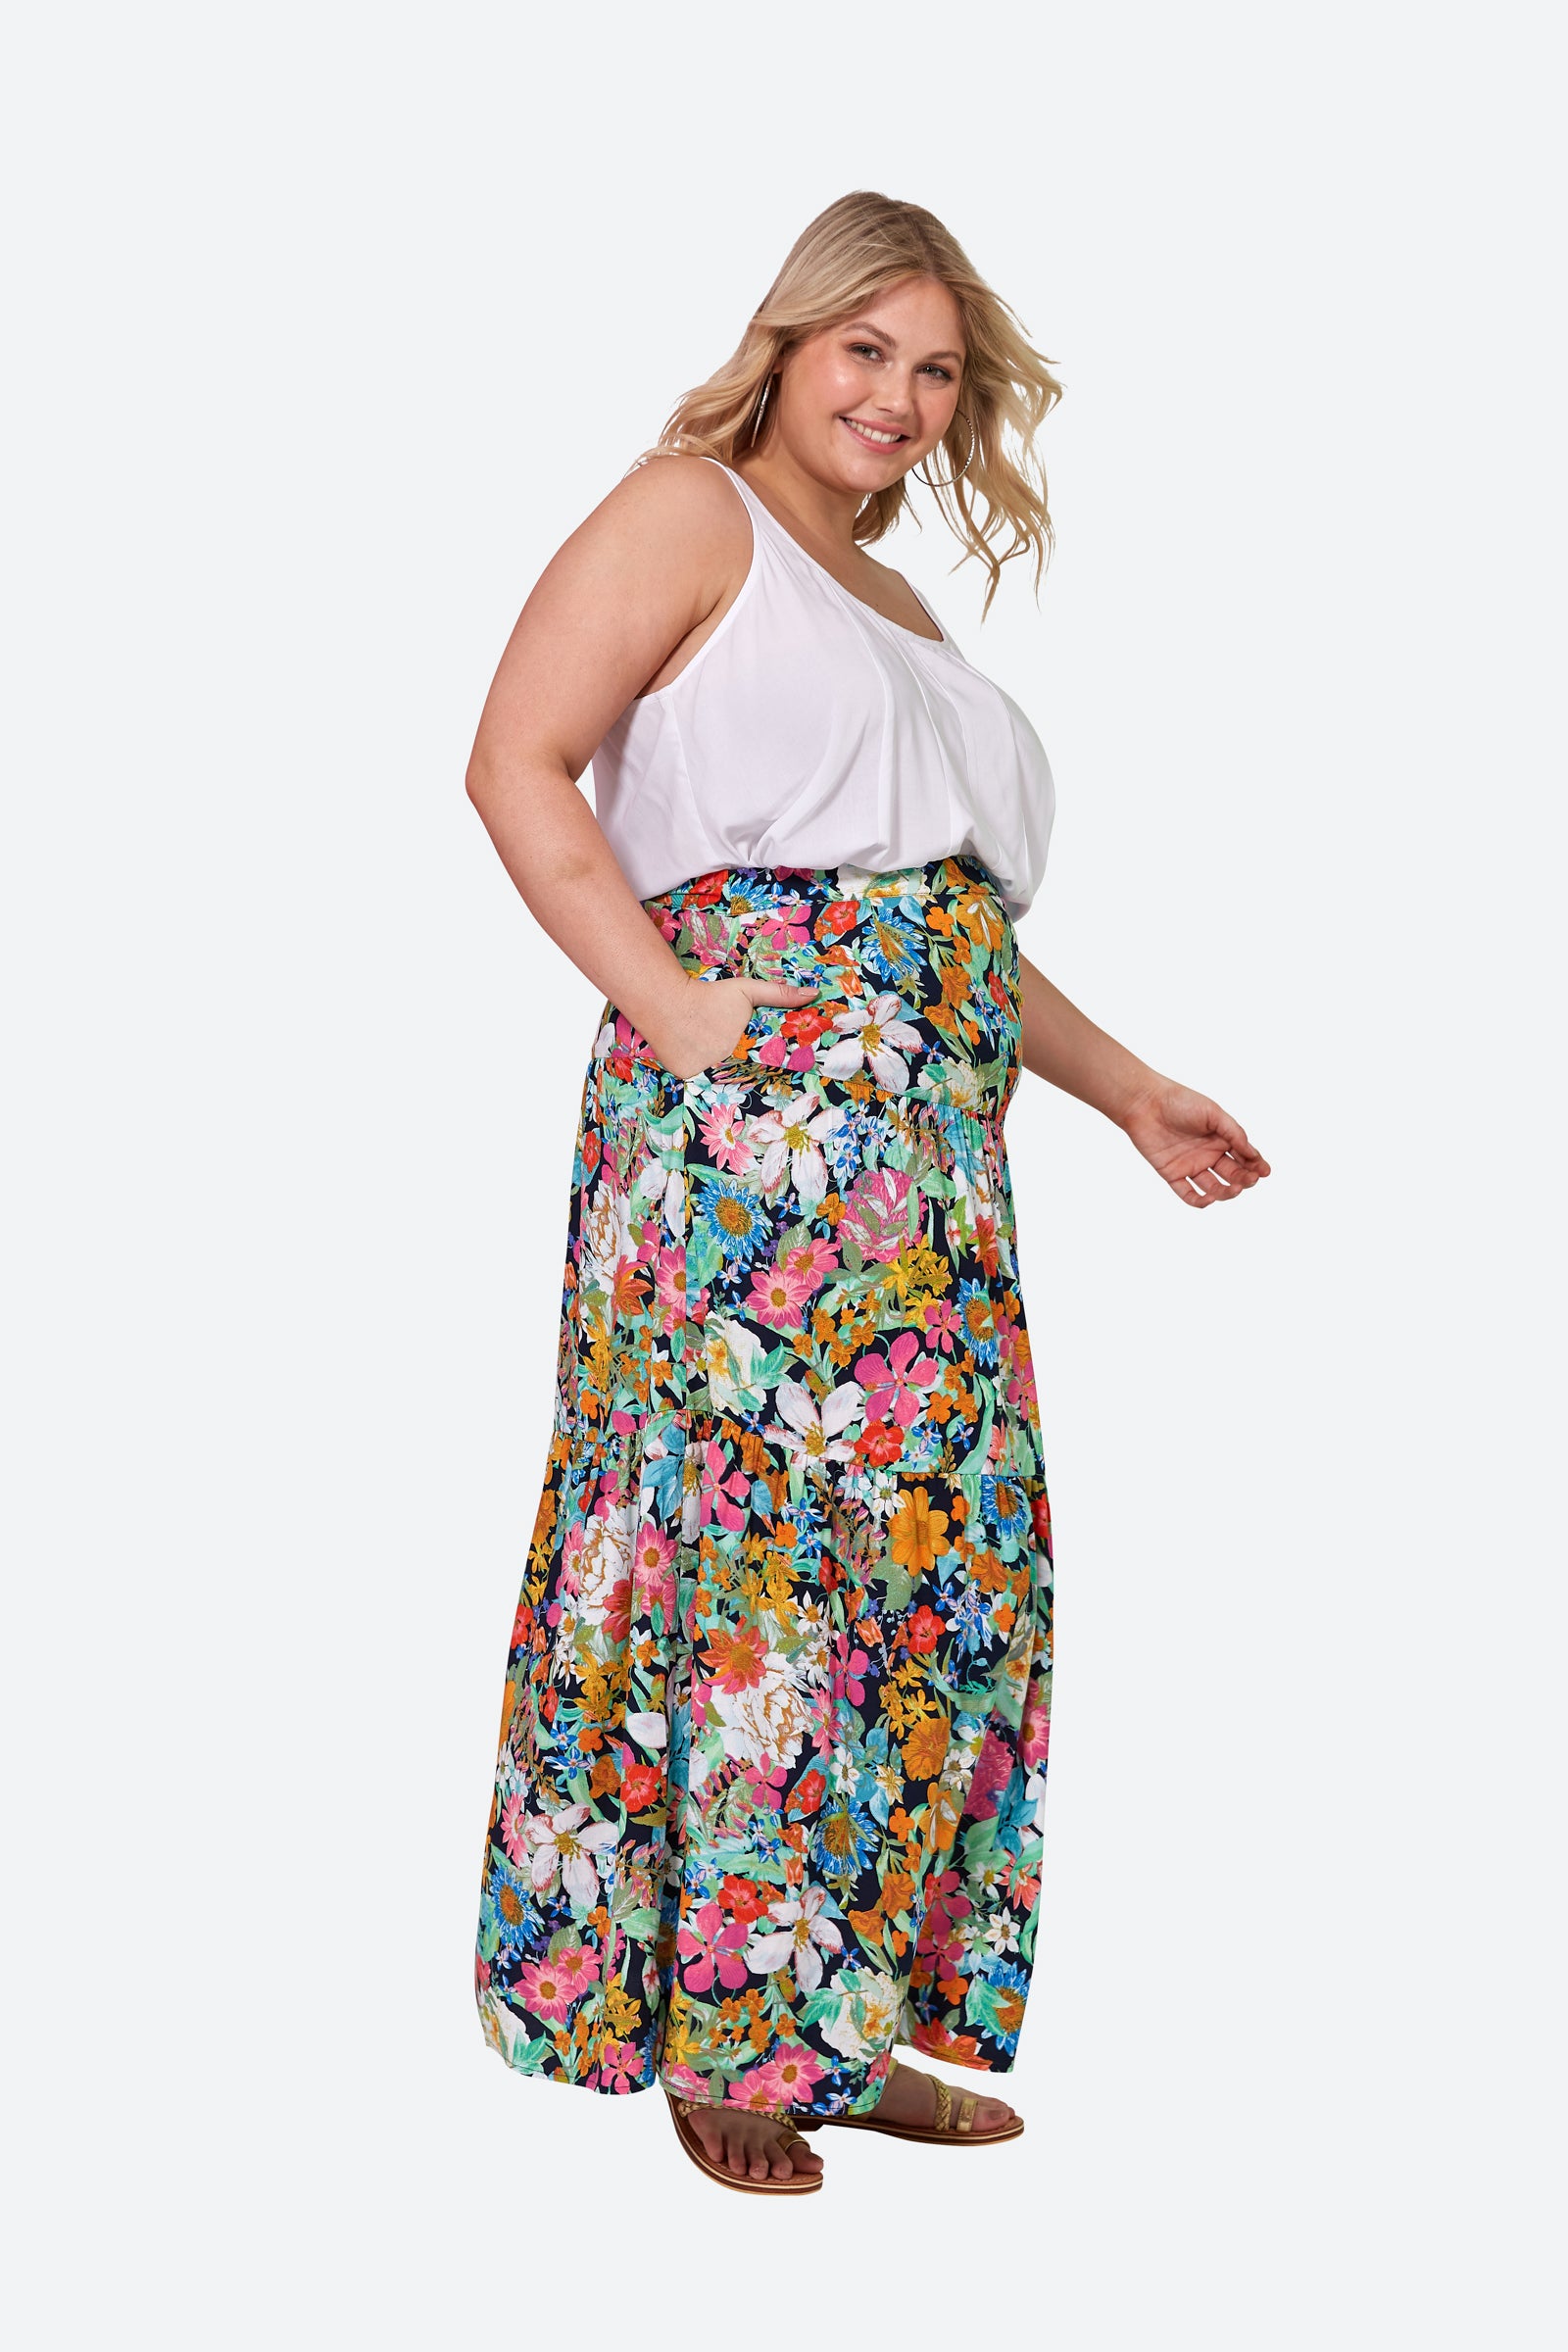 Esprit Maxi Skirt - Navy Flourish - eb&ive Clothing - Skirt Maxi